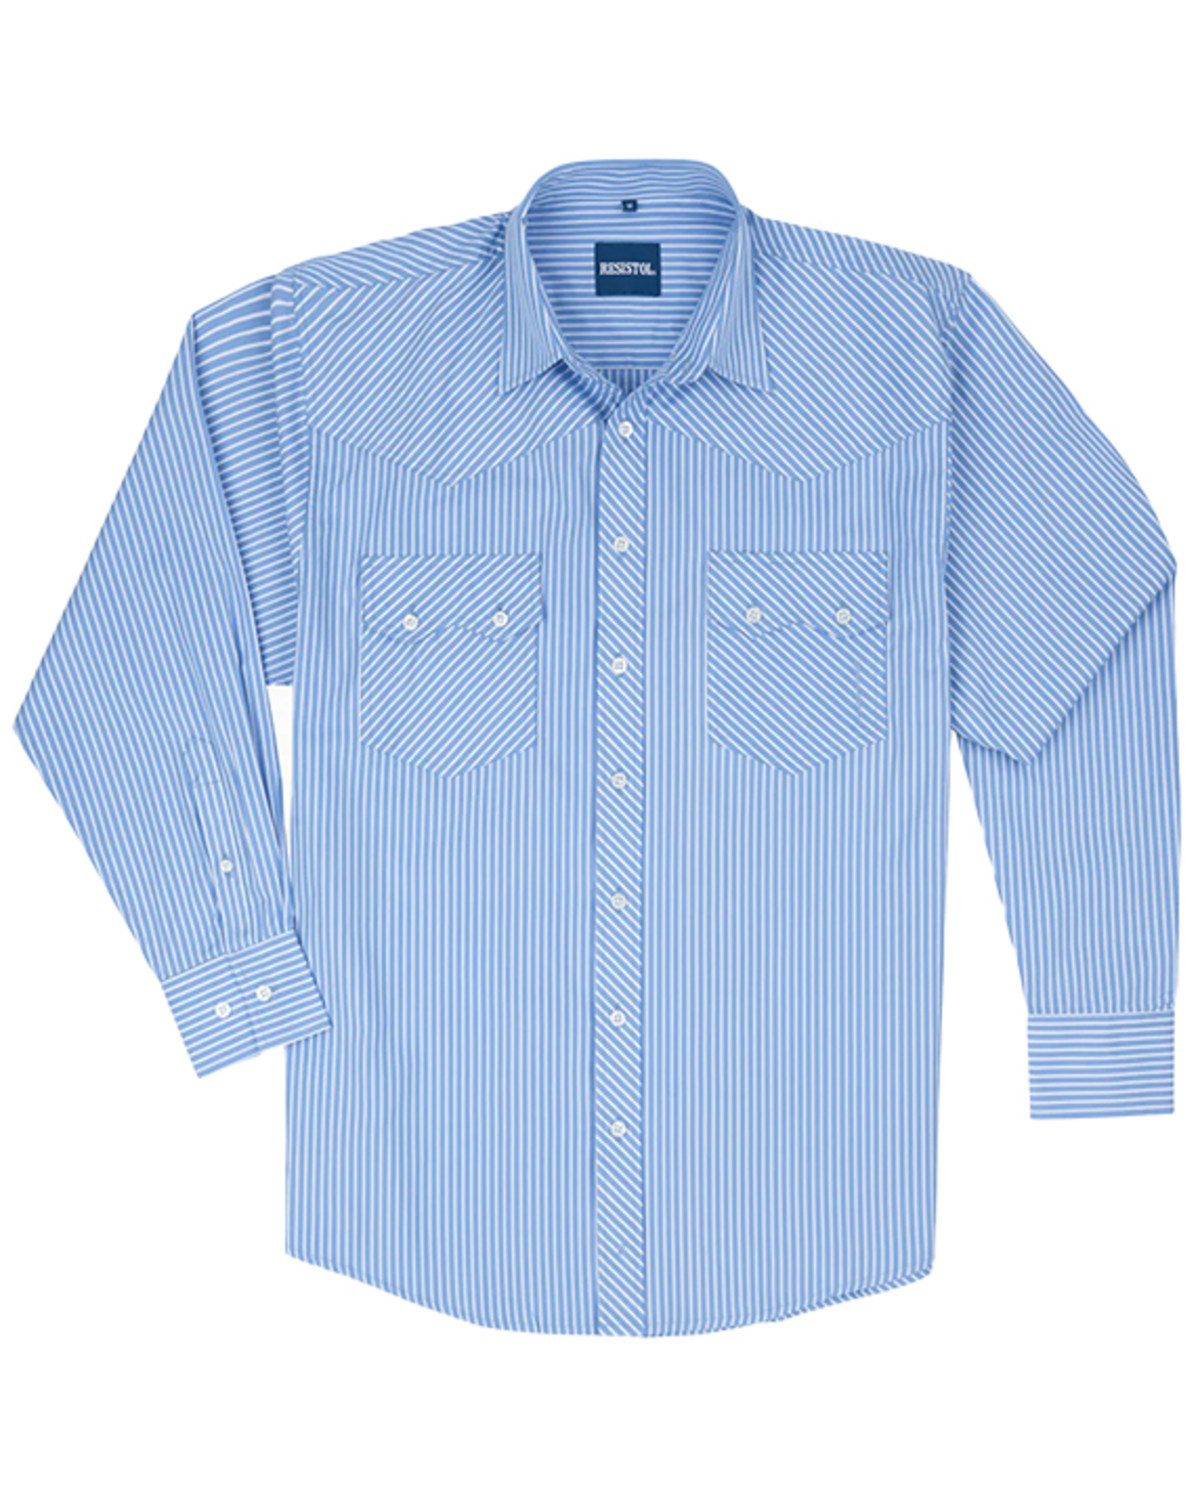 Resistol Men's Weston Striped Print Short Sleeve Button Down Western Shirt